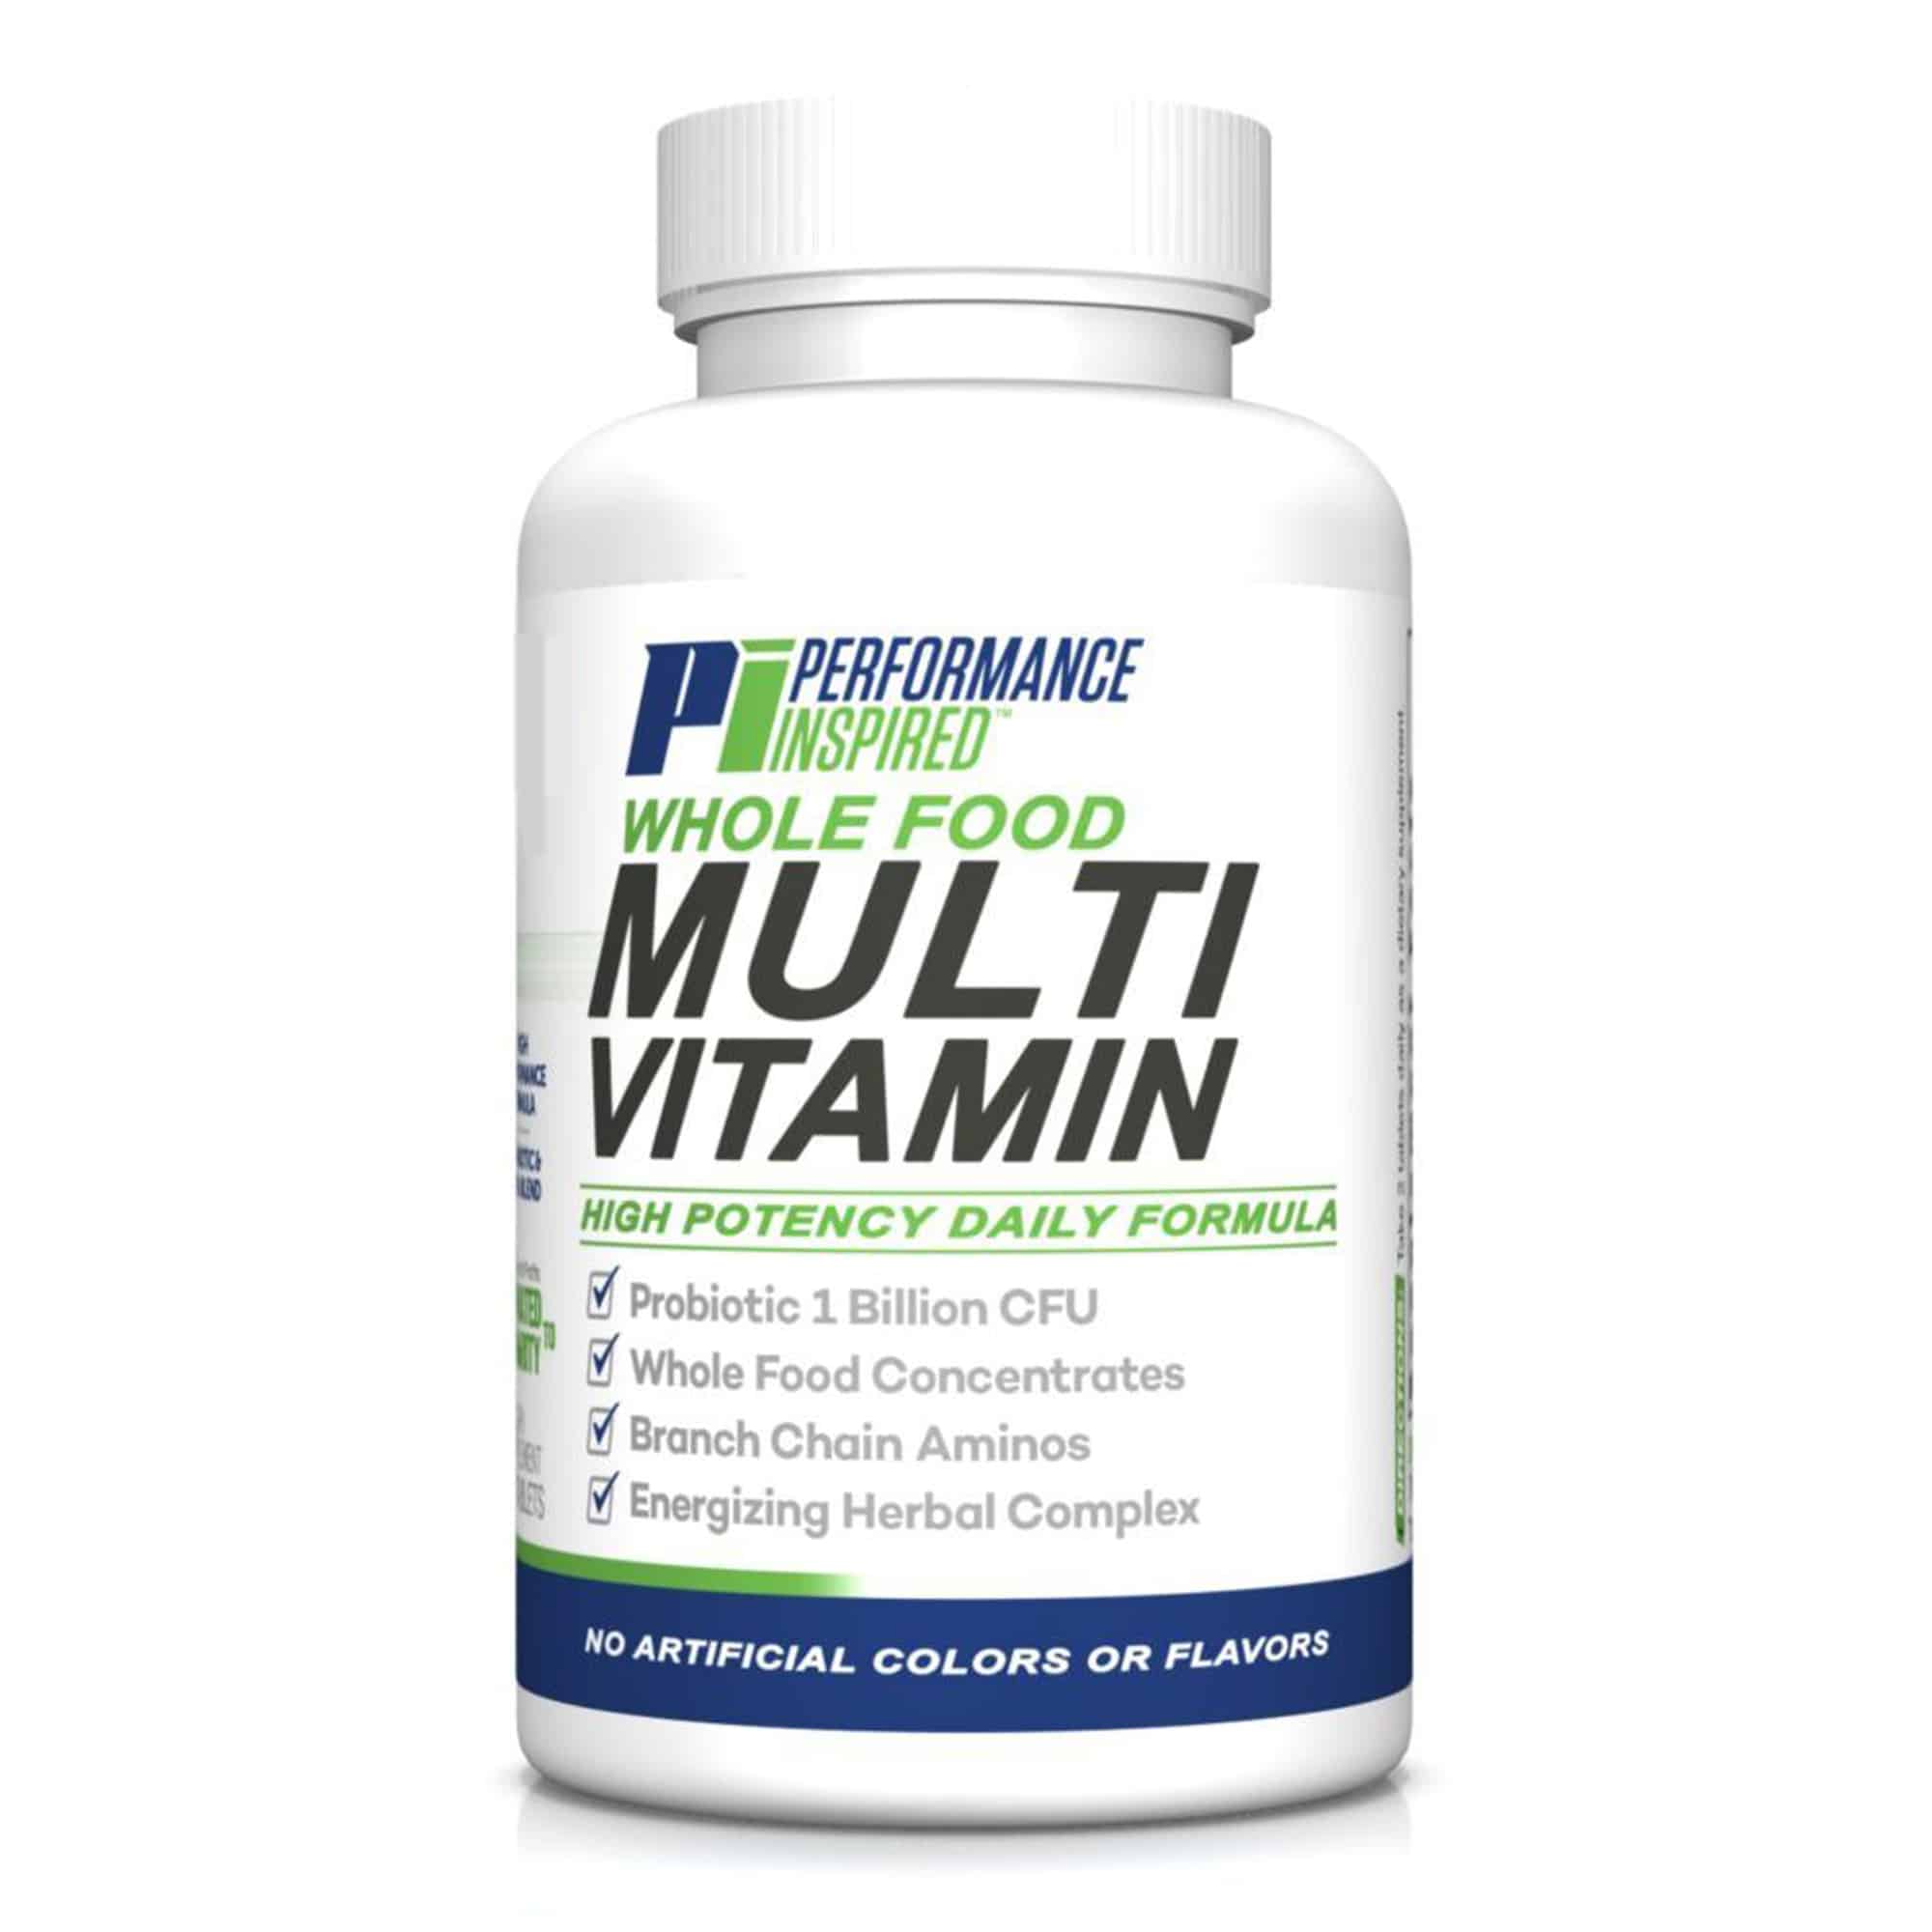 Топ мультивитаминов. Мультивитамины. Витамины мультивитамины. Мультивитамины таблетки. Мультивитамины спортивные.